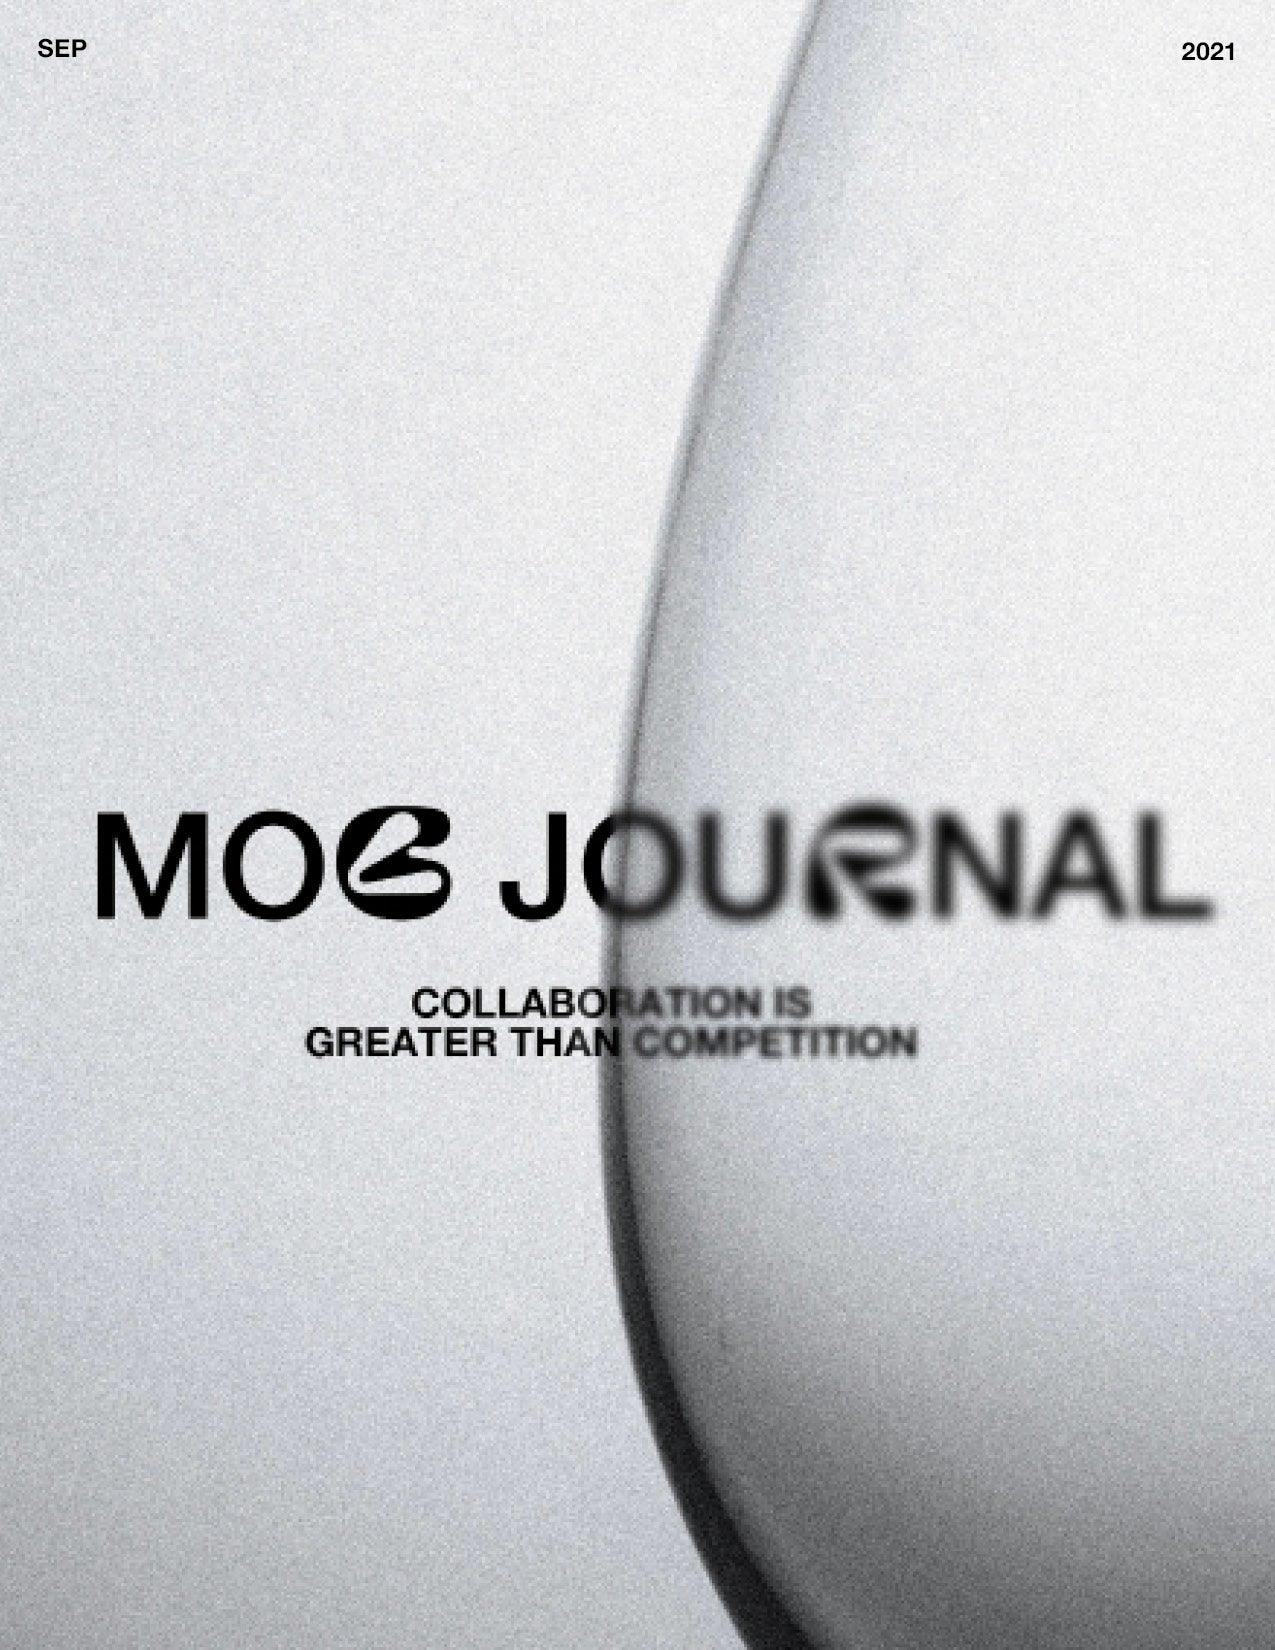 MOB JOURNAL | VOLUME SEVENTEEN | ISSUE #38 - Mob Journal